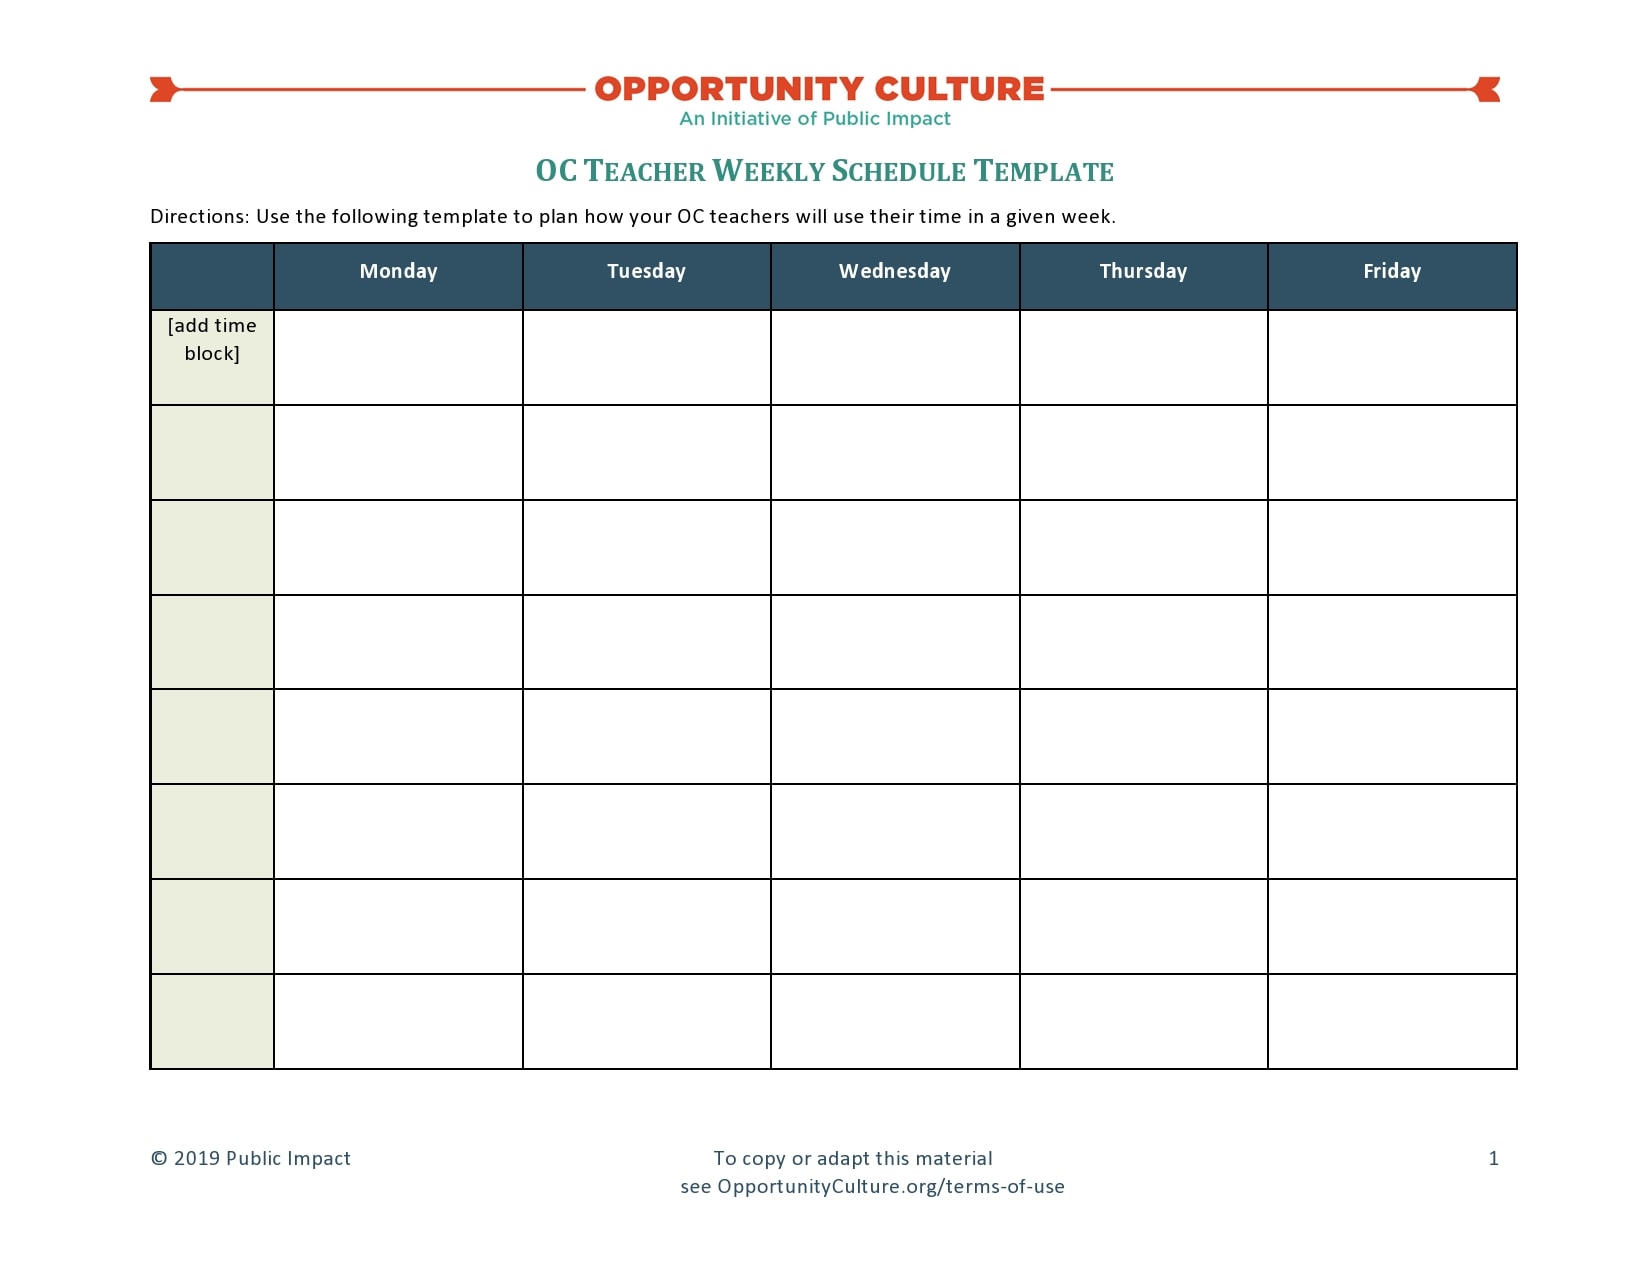 weekly work schedule template